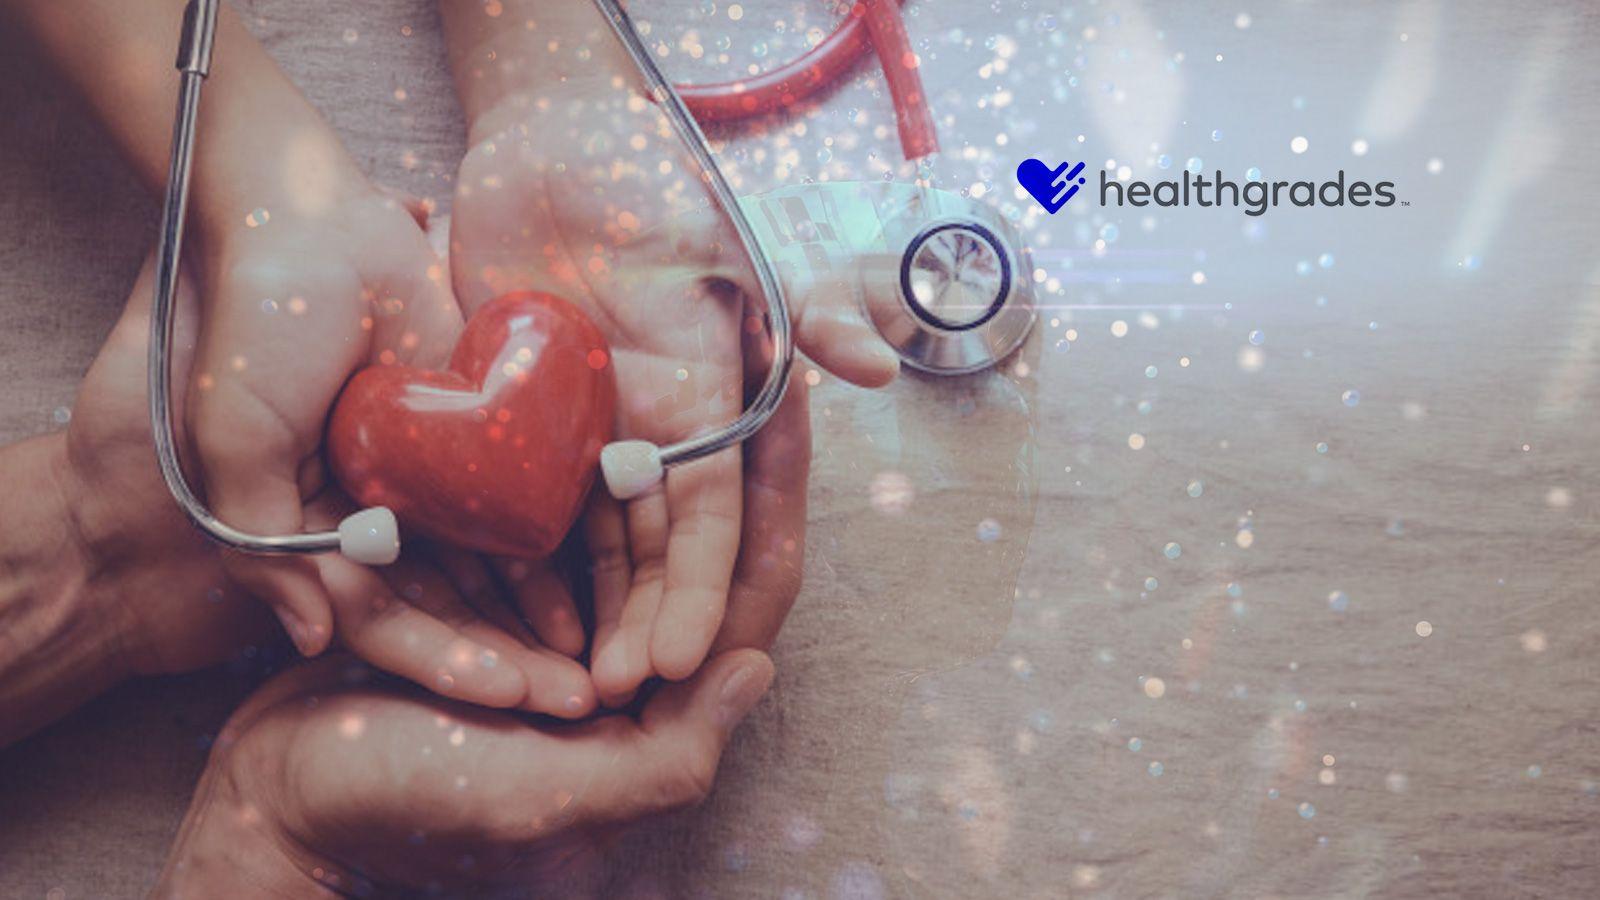 Healthgrades Heart Logo - Healthgrades Acquires Influence Health